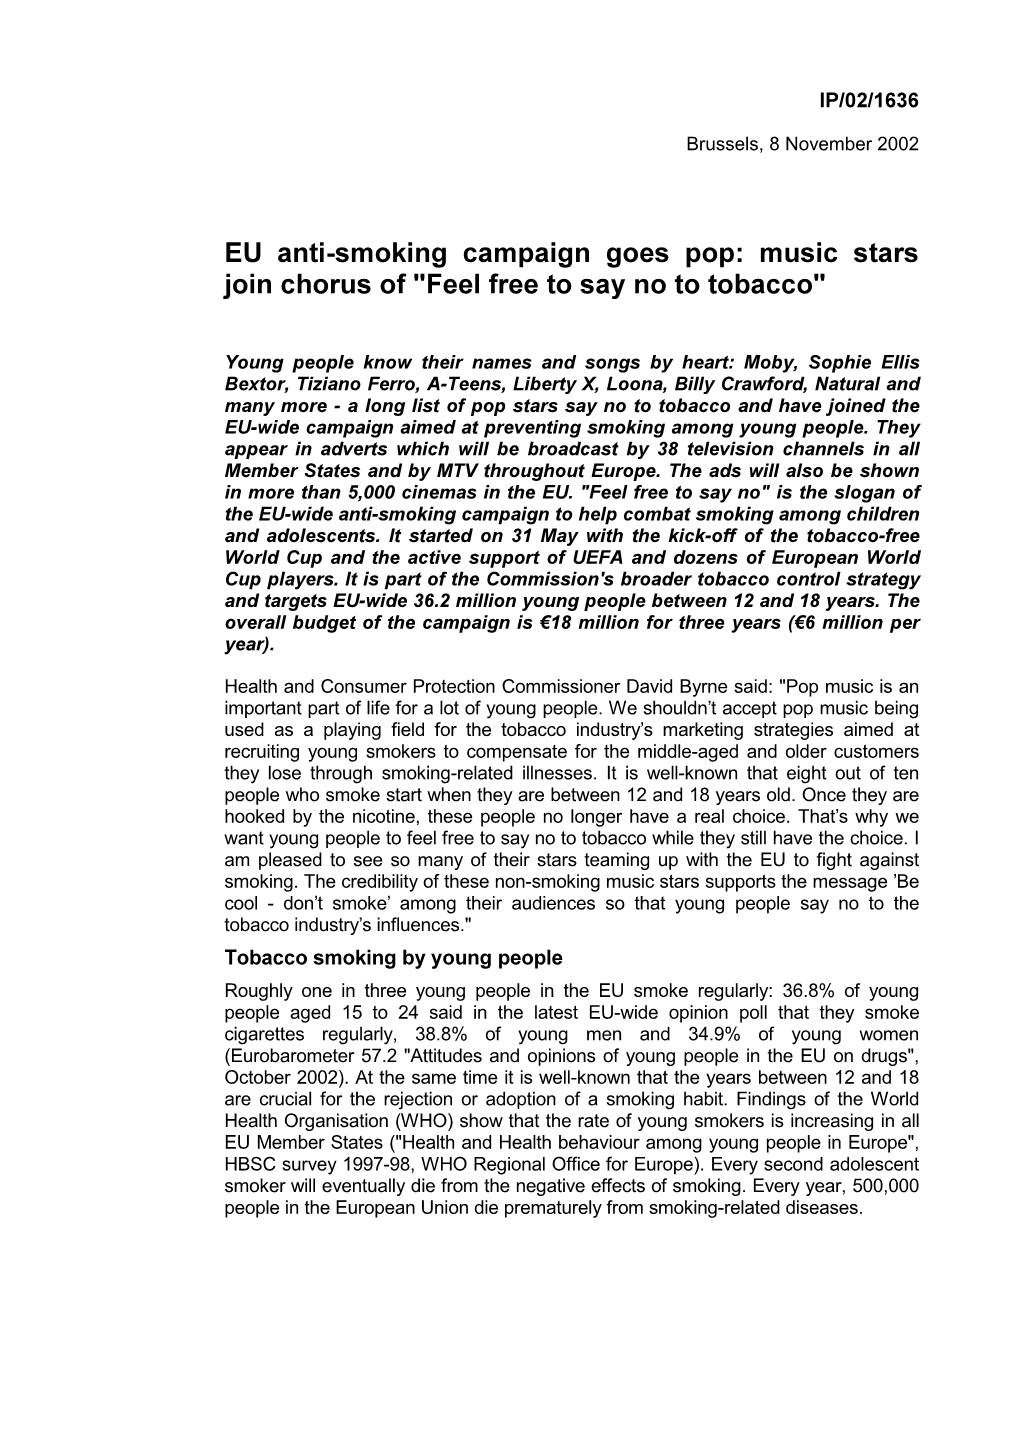 EU Anti Smoking Campaign Goes